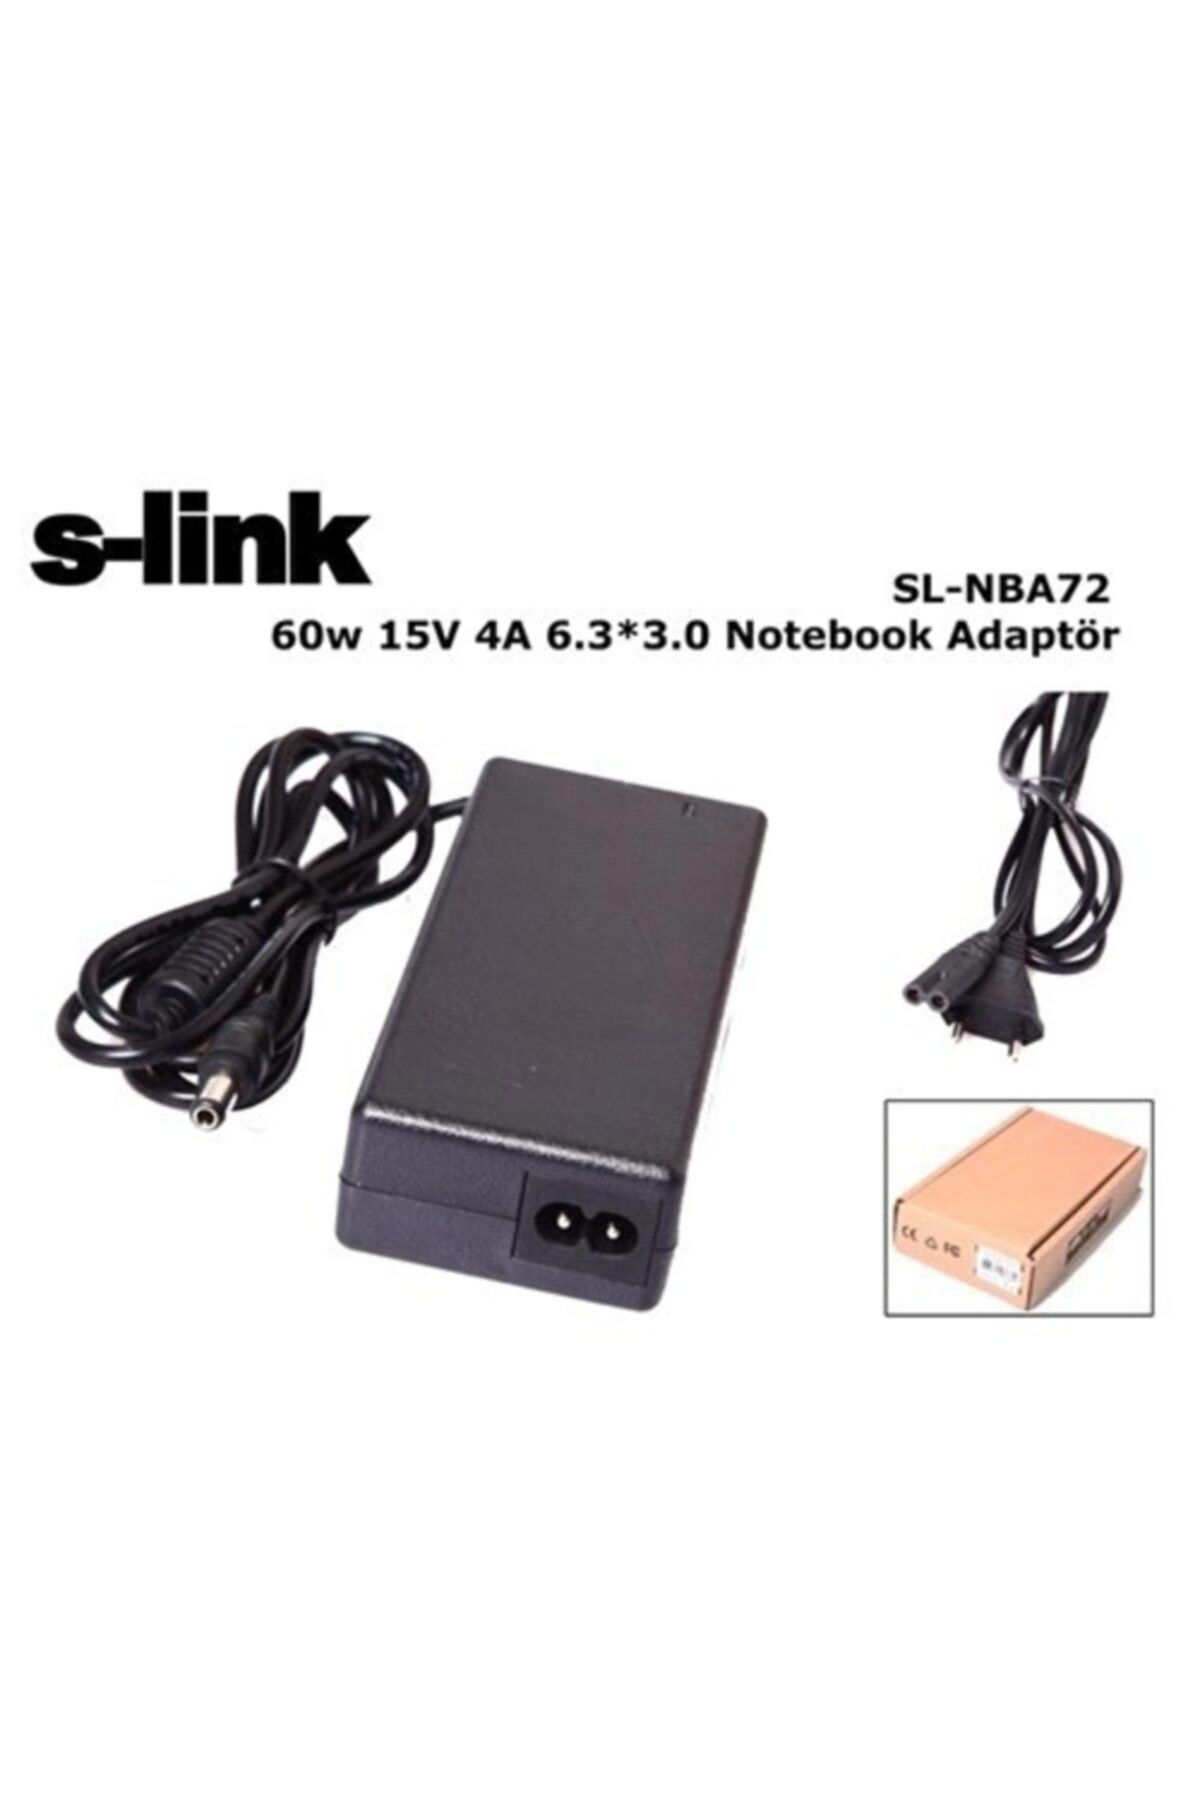 S-Link Sl-nba72 60w 15v 4a 6.3-3.0 Notebook